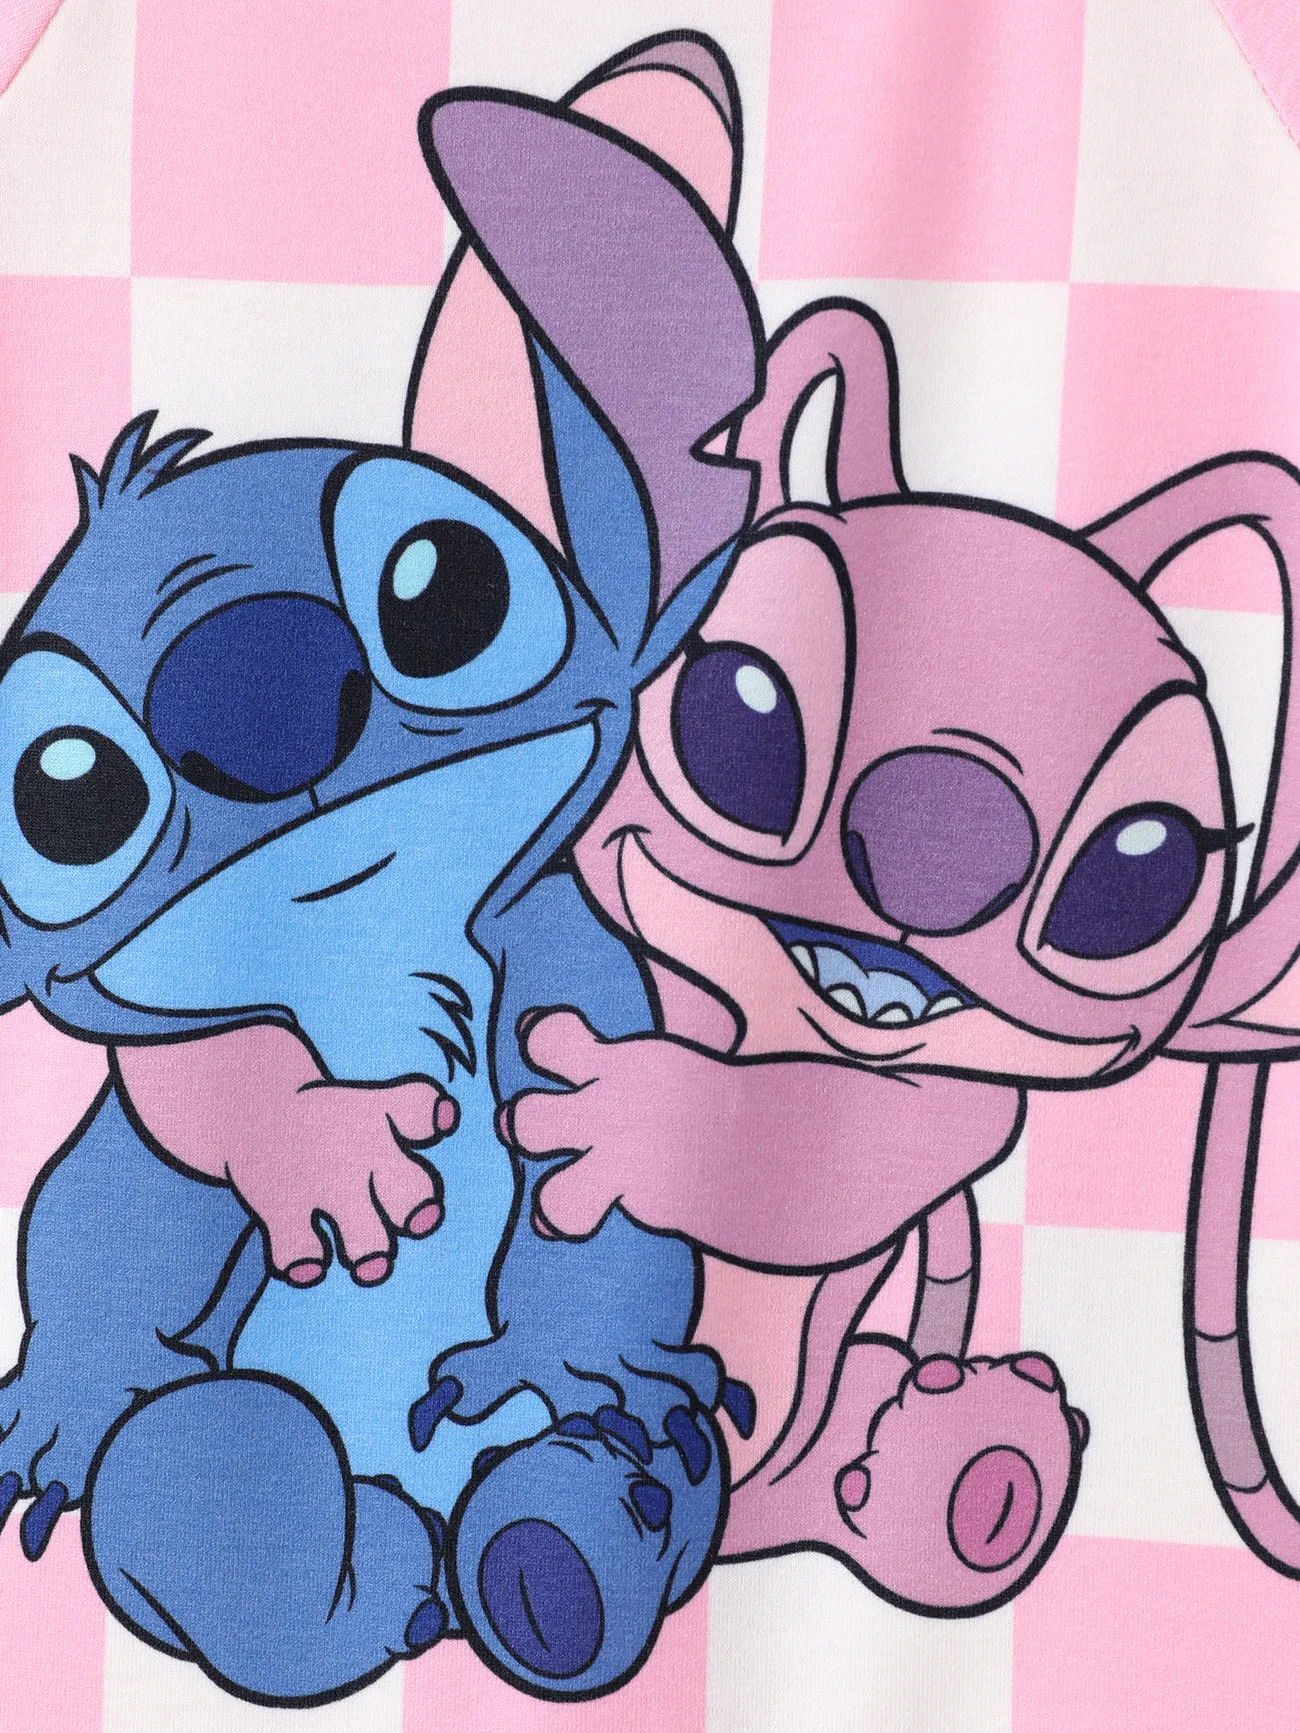 Disney Stitch Baby Boys/Girls 1pc Naia™ Character Grid/chessboard Print Romper Pink big image 1